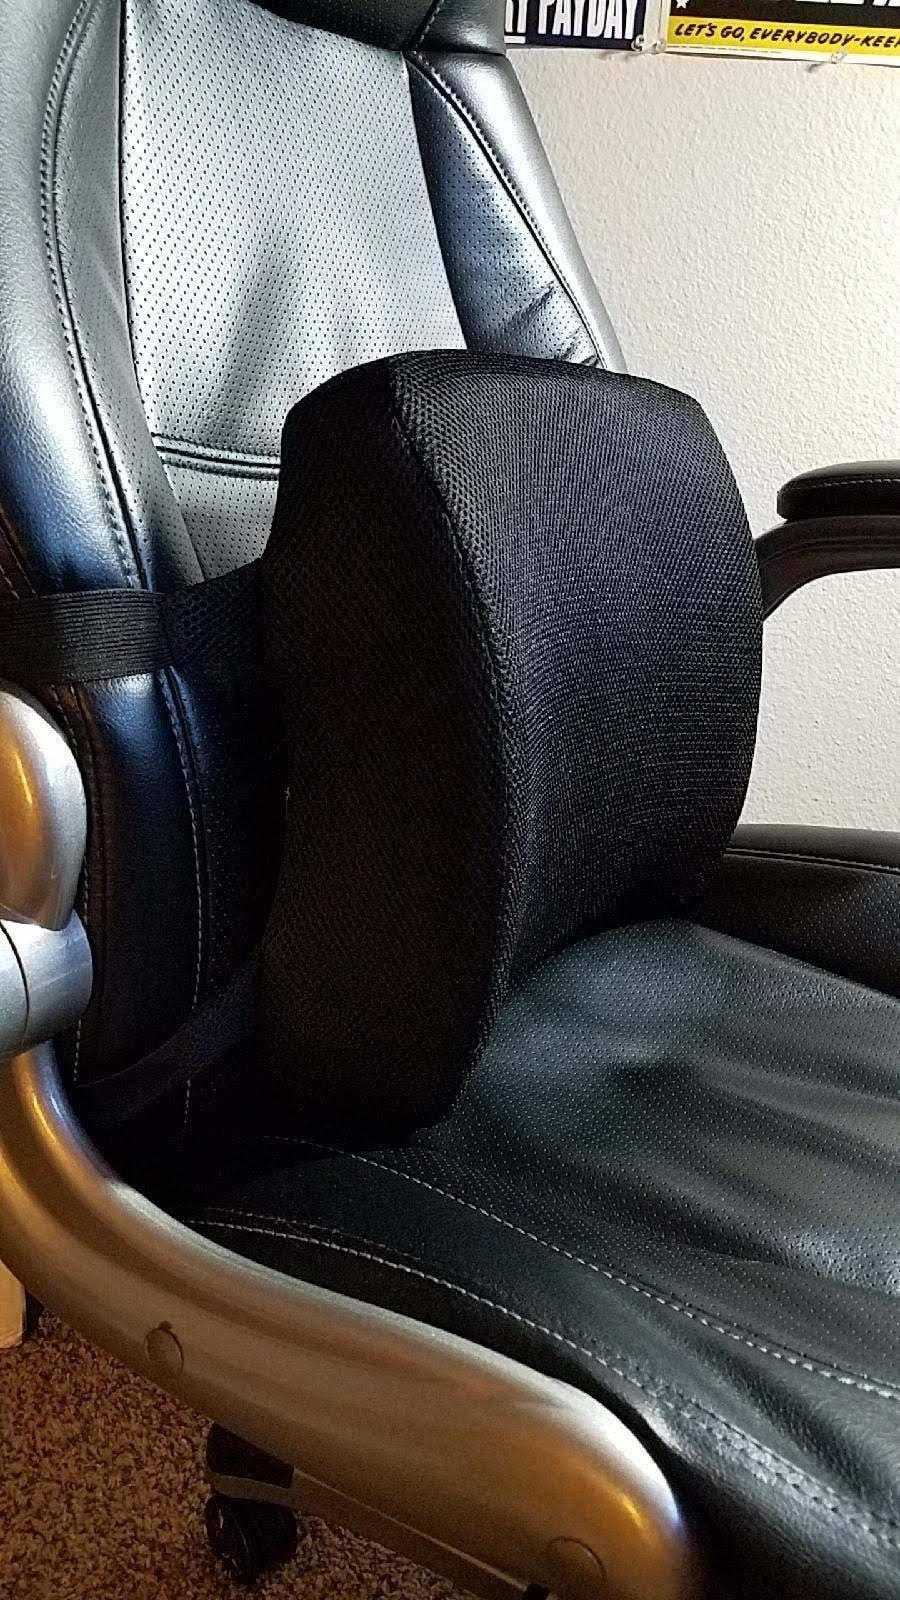 ComfiLife Body Positioner, Gel Enhanced Seat Cushion & Lumbar Support  Bundle - Rubber, Memory Foam, Office Chair & Car Seat Cushion for Back Pain  